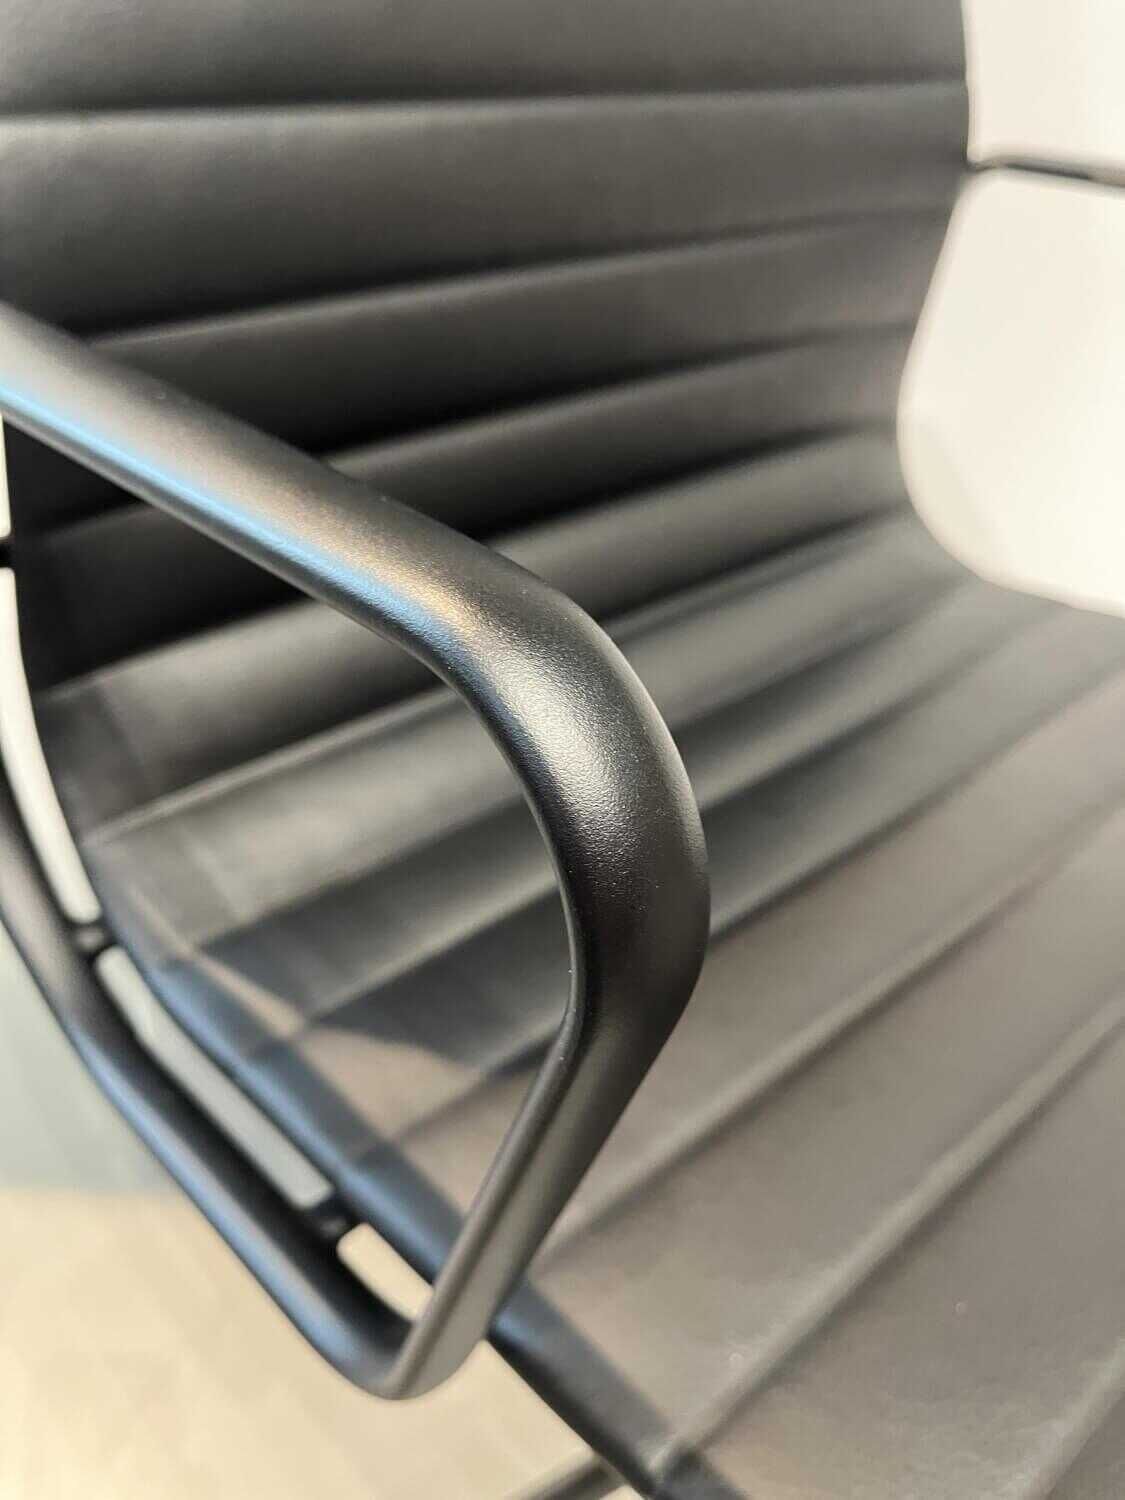 Stuhl Aluminium Chair EA 104 Leder L20 Nero 66/66 Schwarz Mit Armlehnen